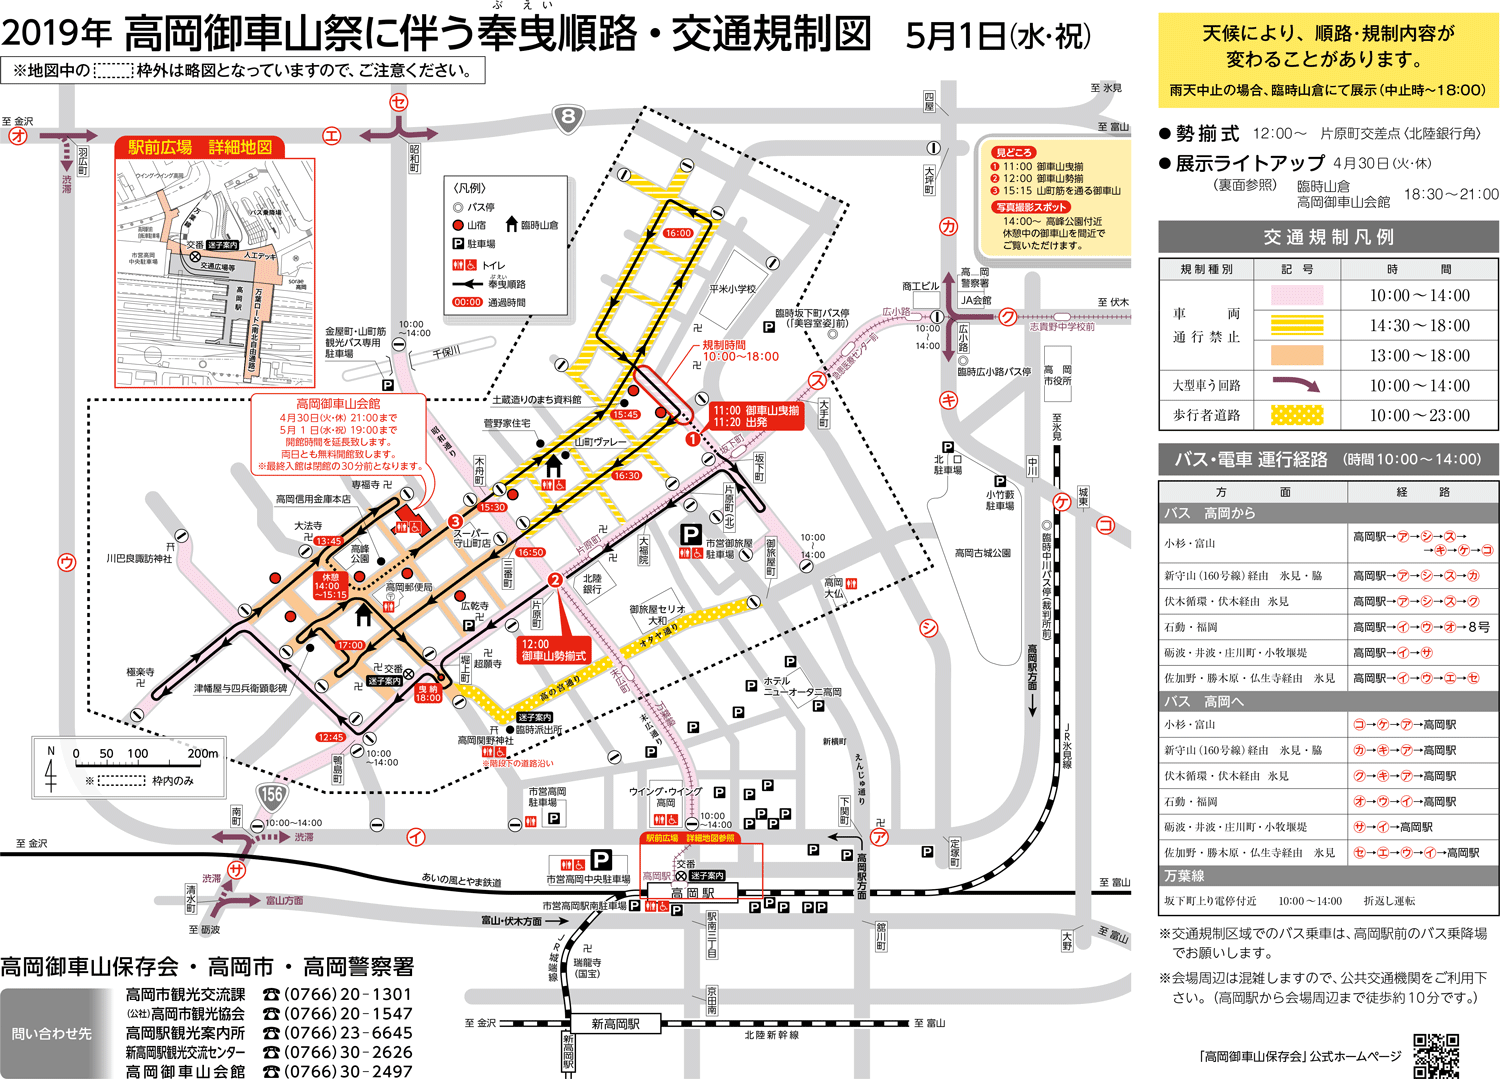 高岡御車山祭2019の交通規制情報